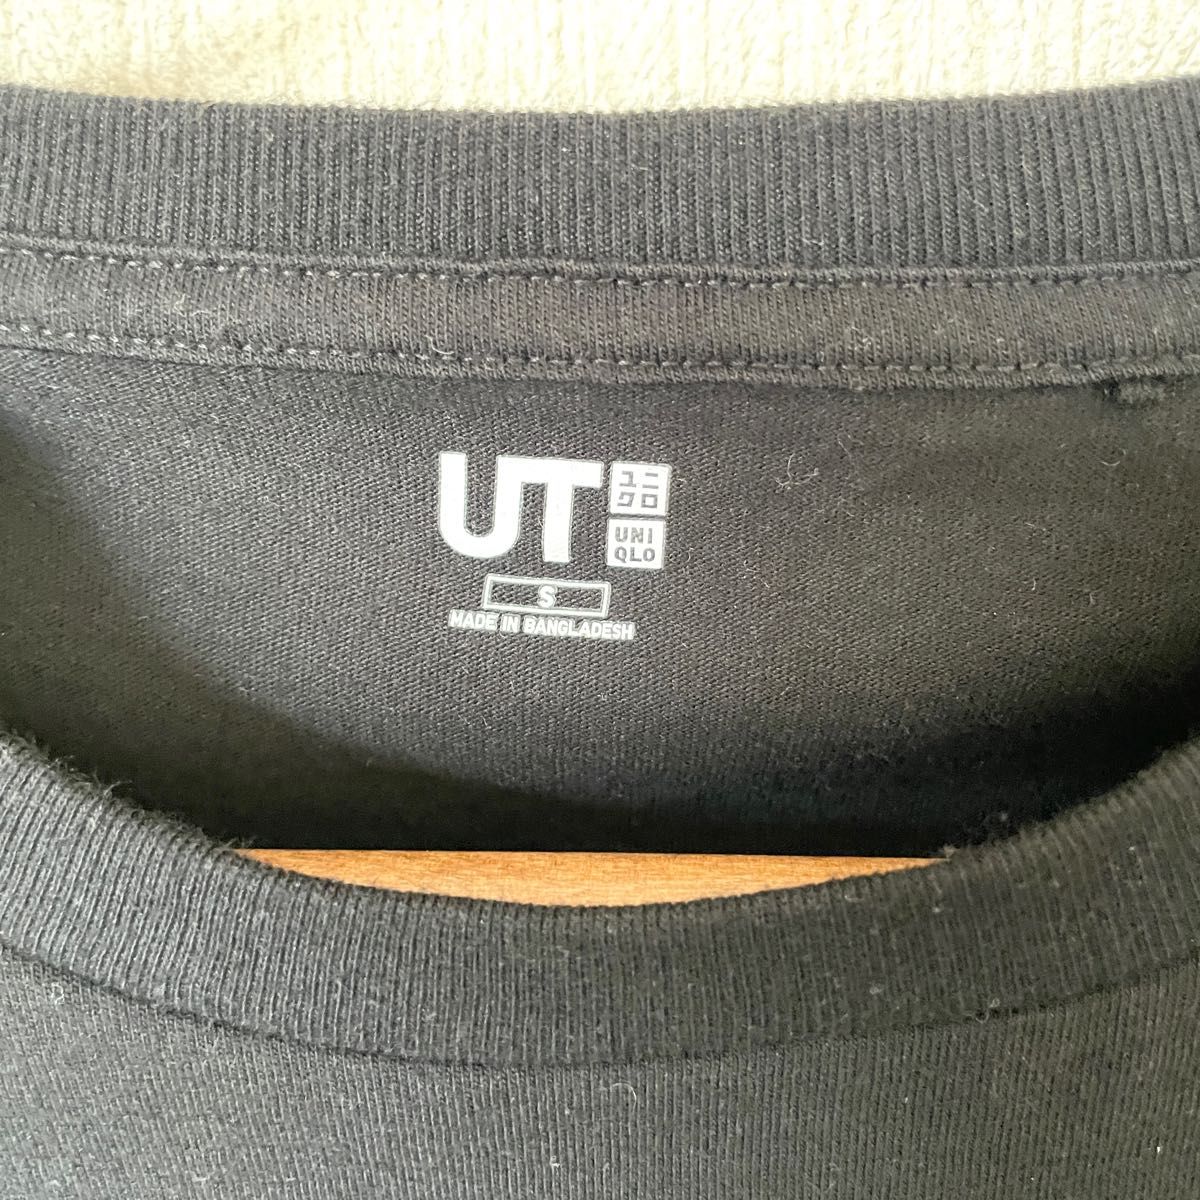 【UNIQLO UT】ユニクロ カメラ プリントTシャツ 半袖 クルーネック メンズ 匿名配送 黒 ブラック S